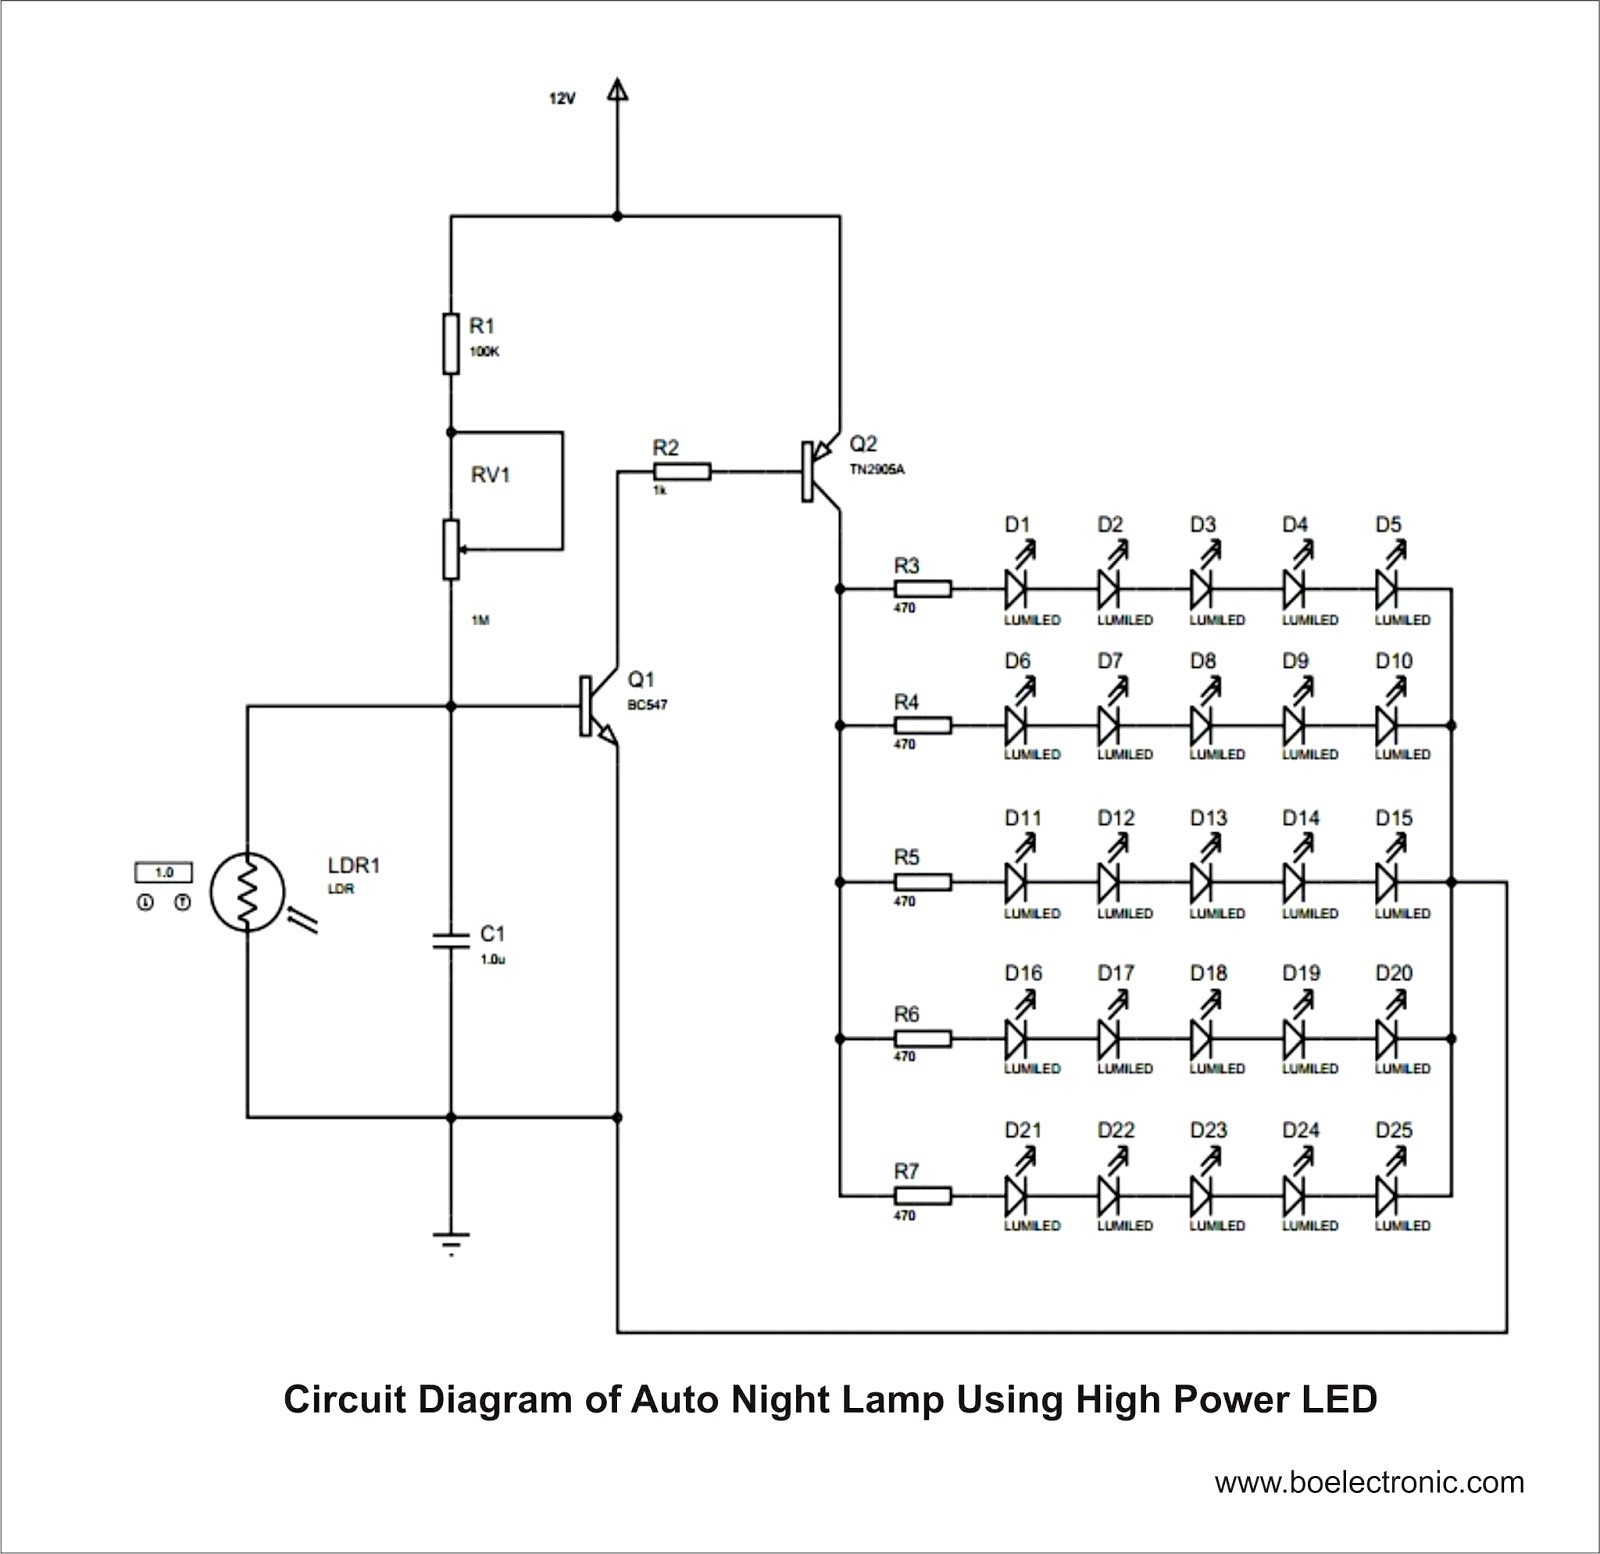 Solar Street Light Circuit Diagram ponent Led Lamp Circuit 220v Light Operated Night Control